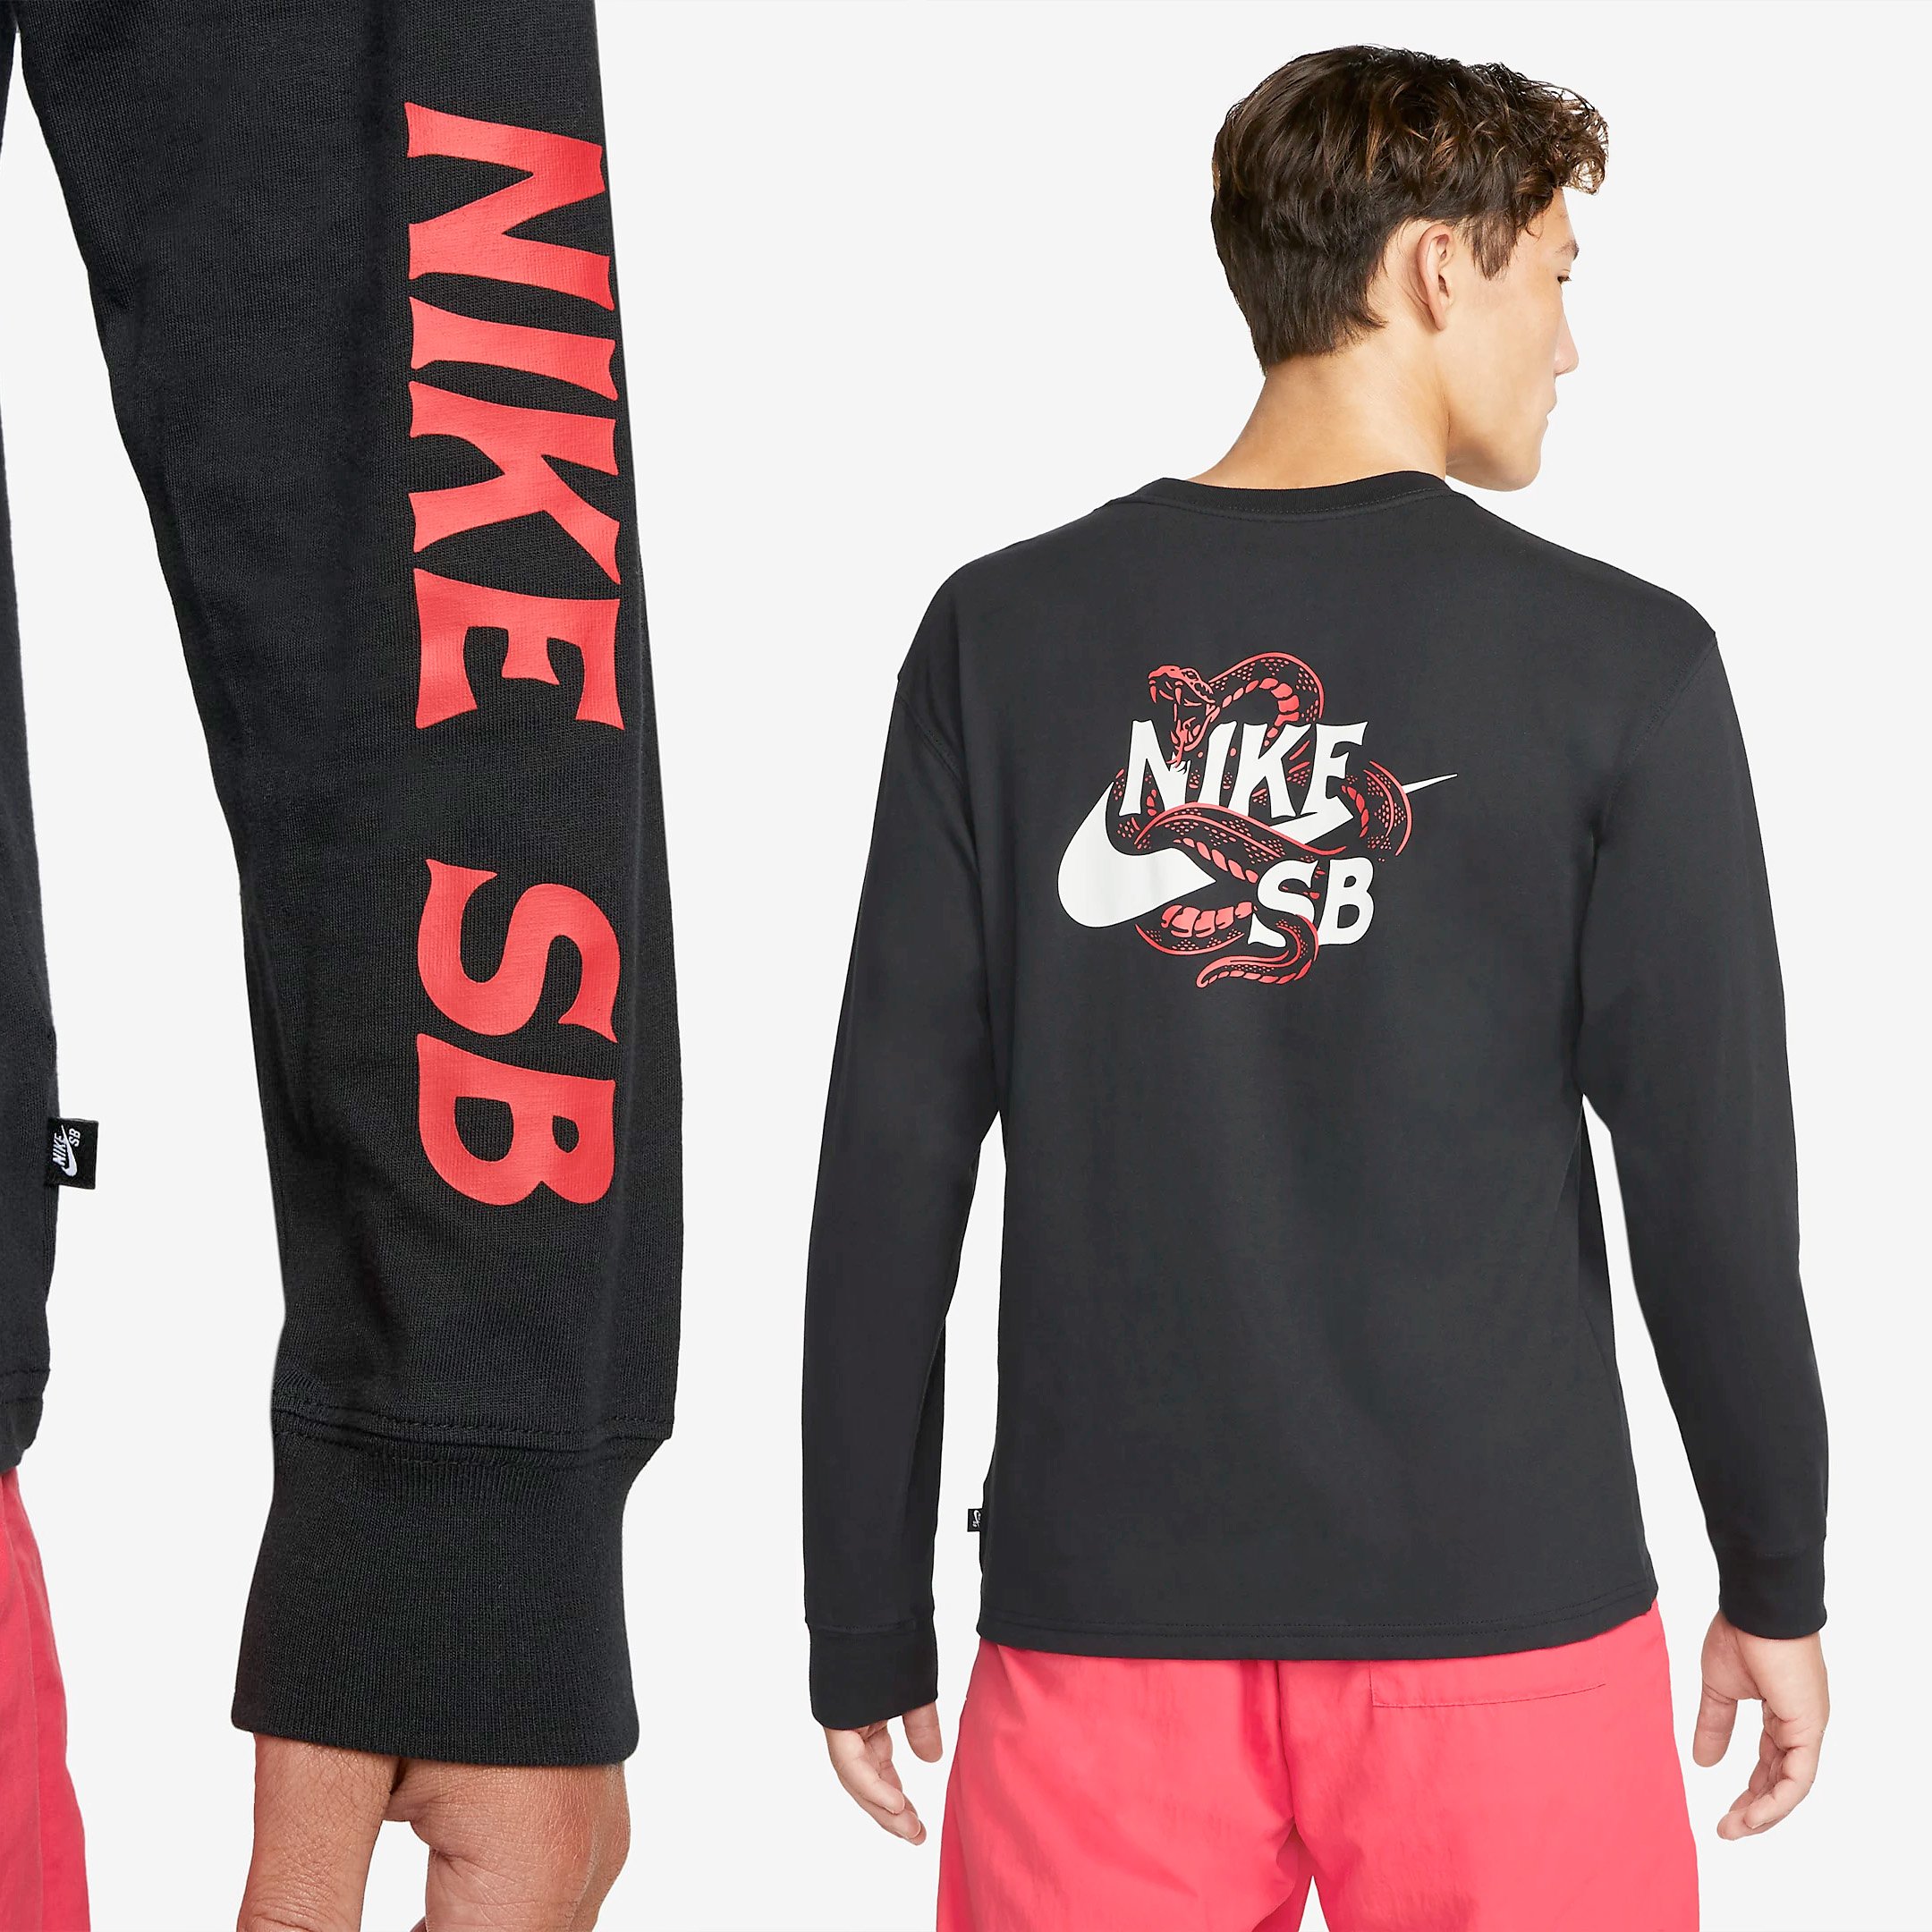 Nike_SB_2B.jpg